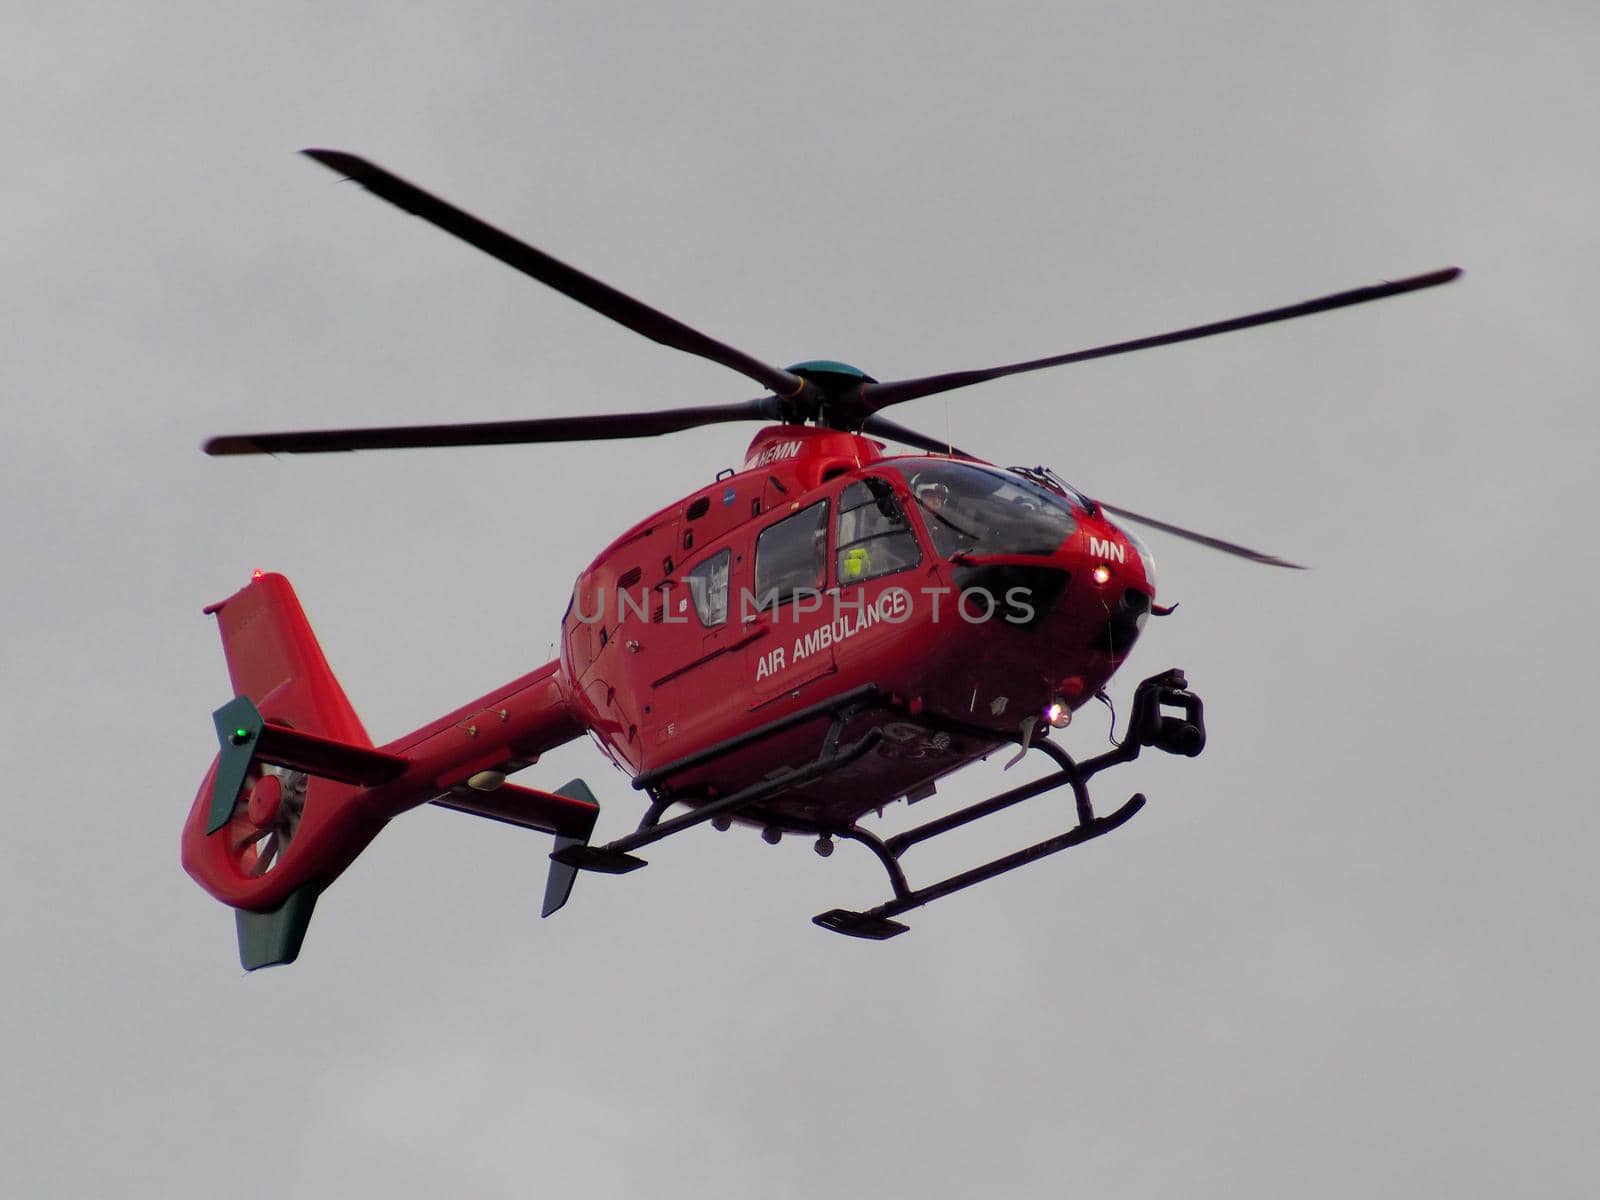 Aldermaston Wharf, Berkshire, UK, April 3 2018: Air Ambulance G-HEMN landing to attend to an emergency